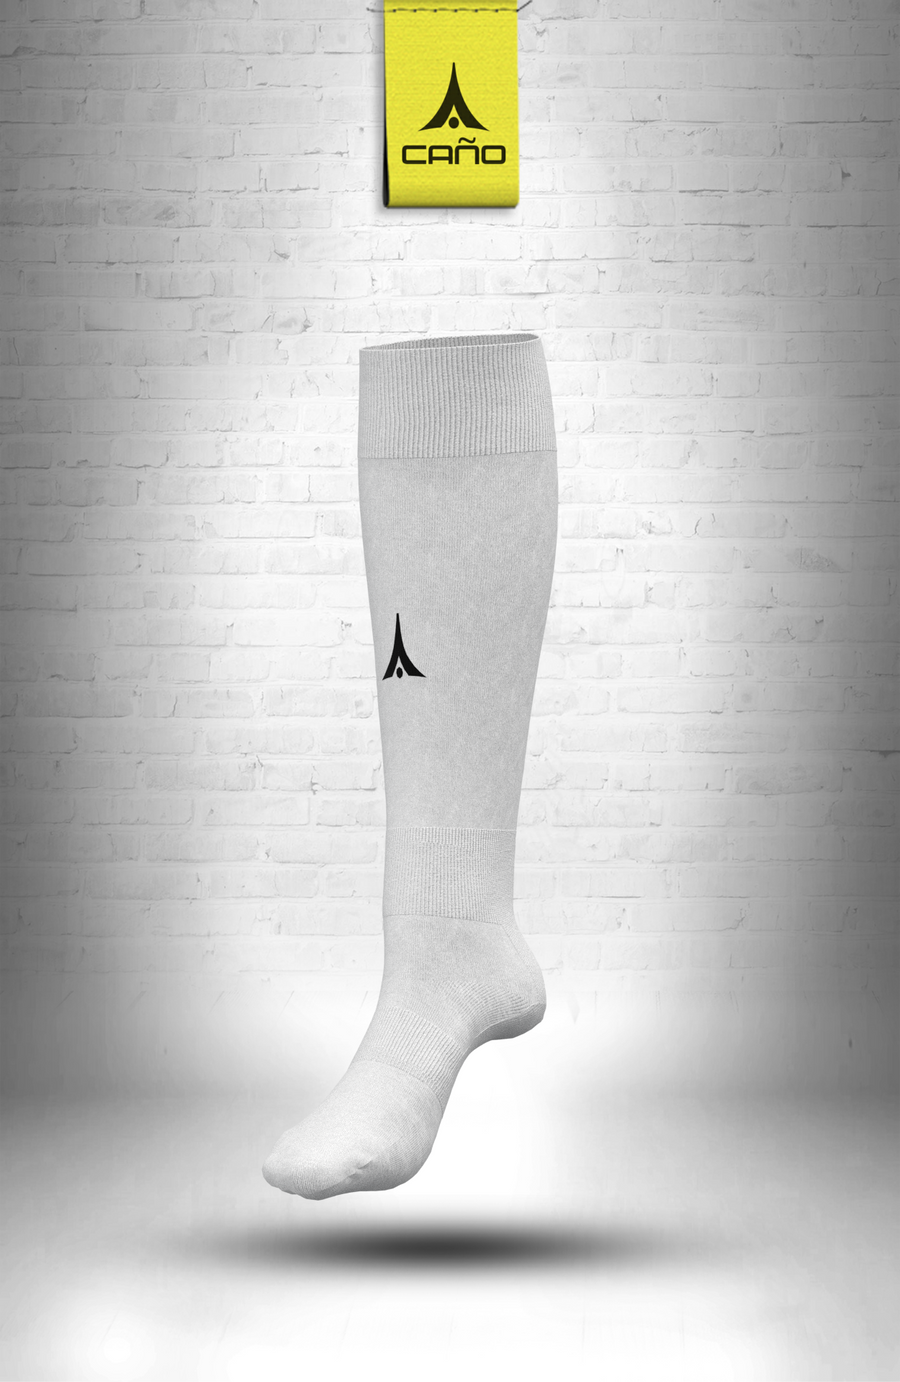 $10.00 - Caño White Soccer Sock